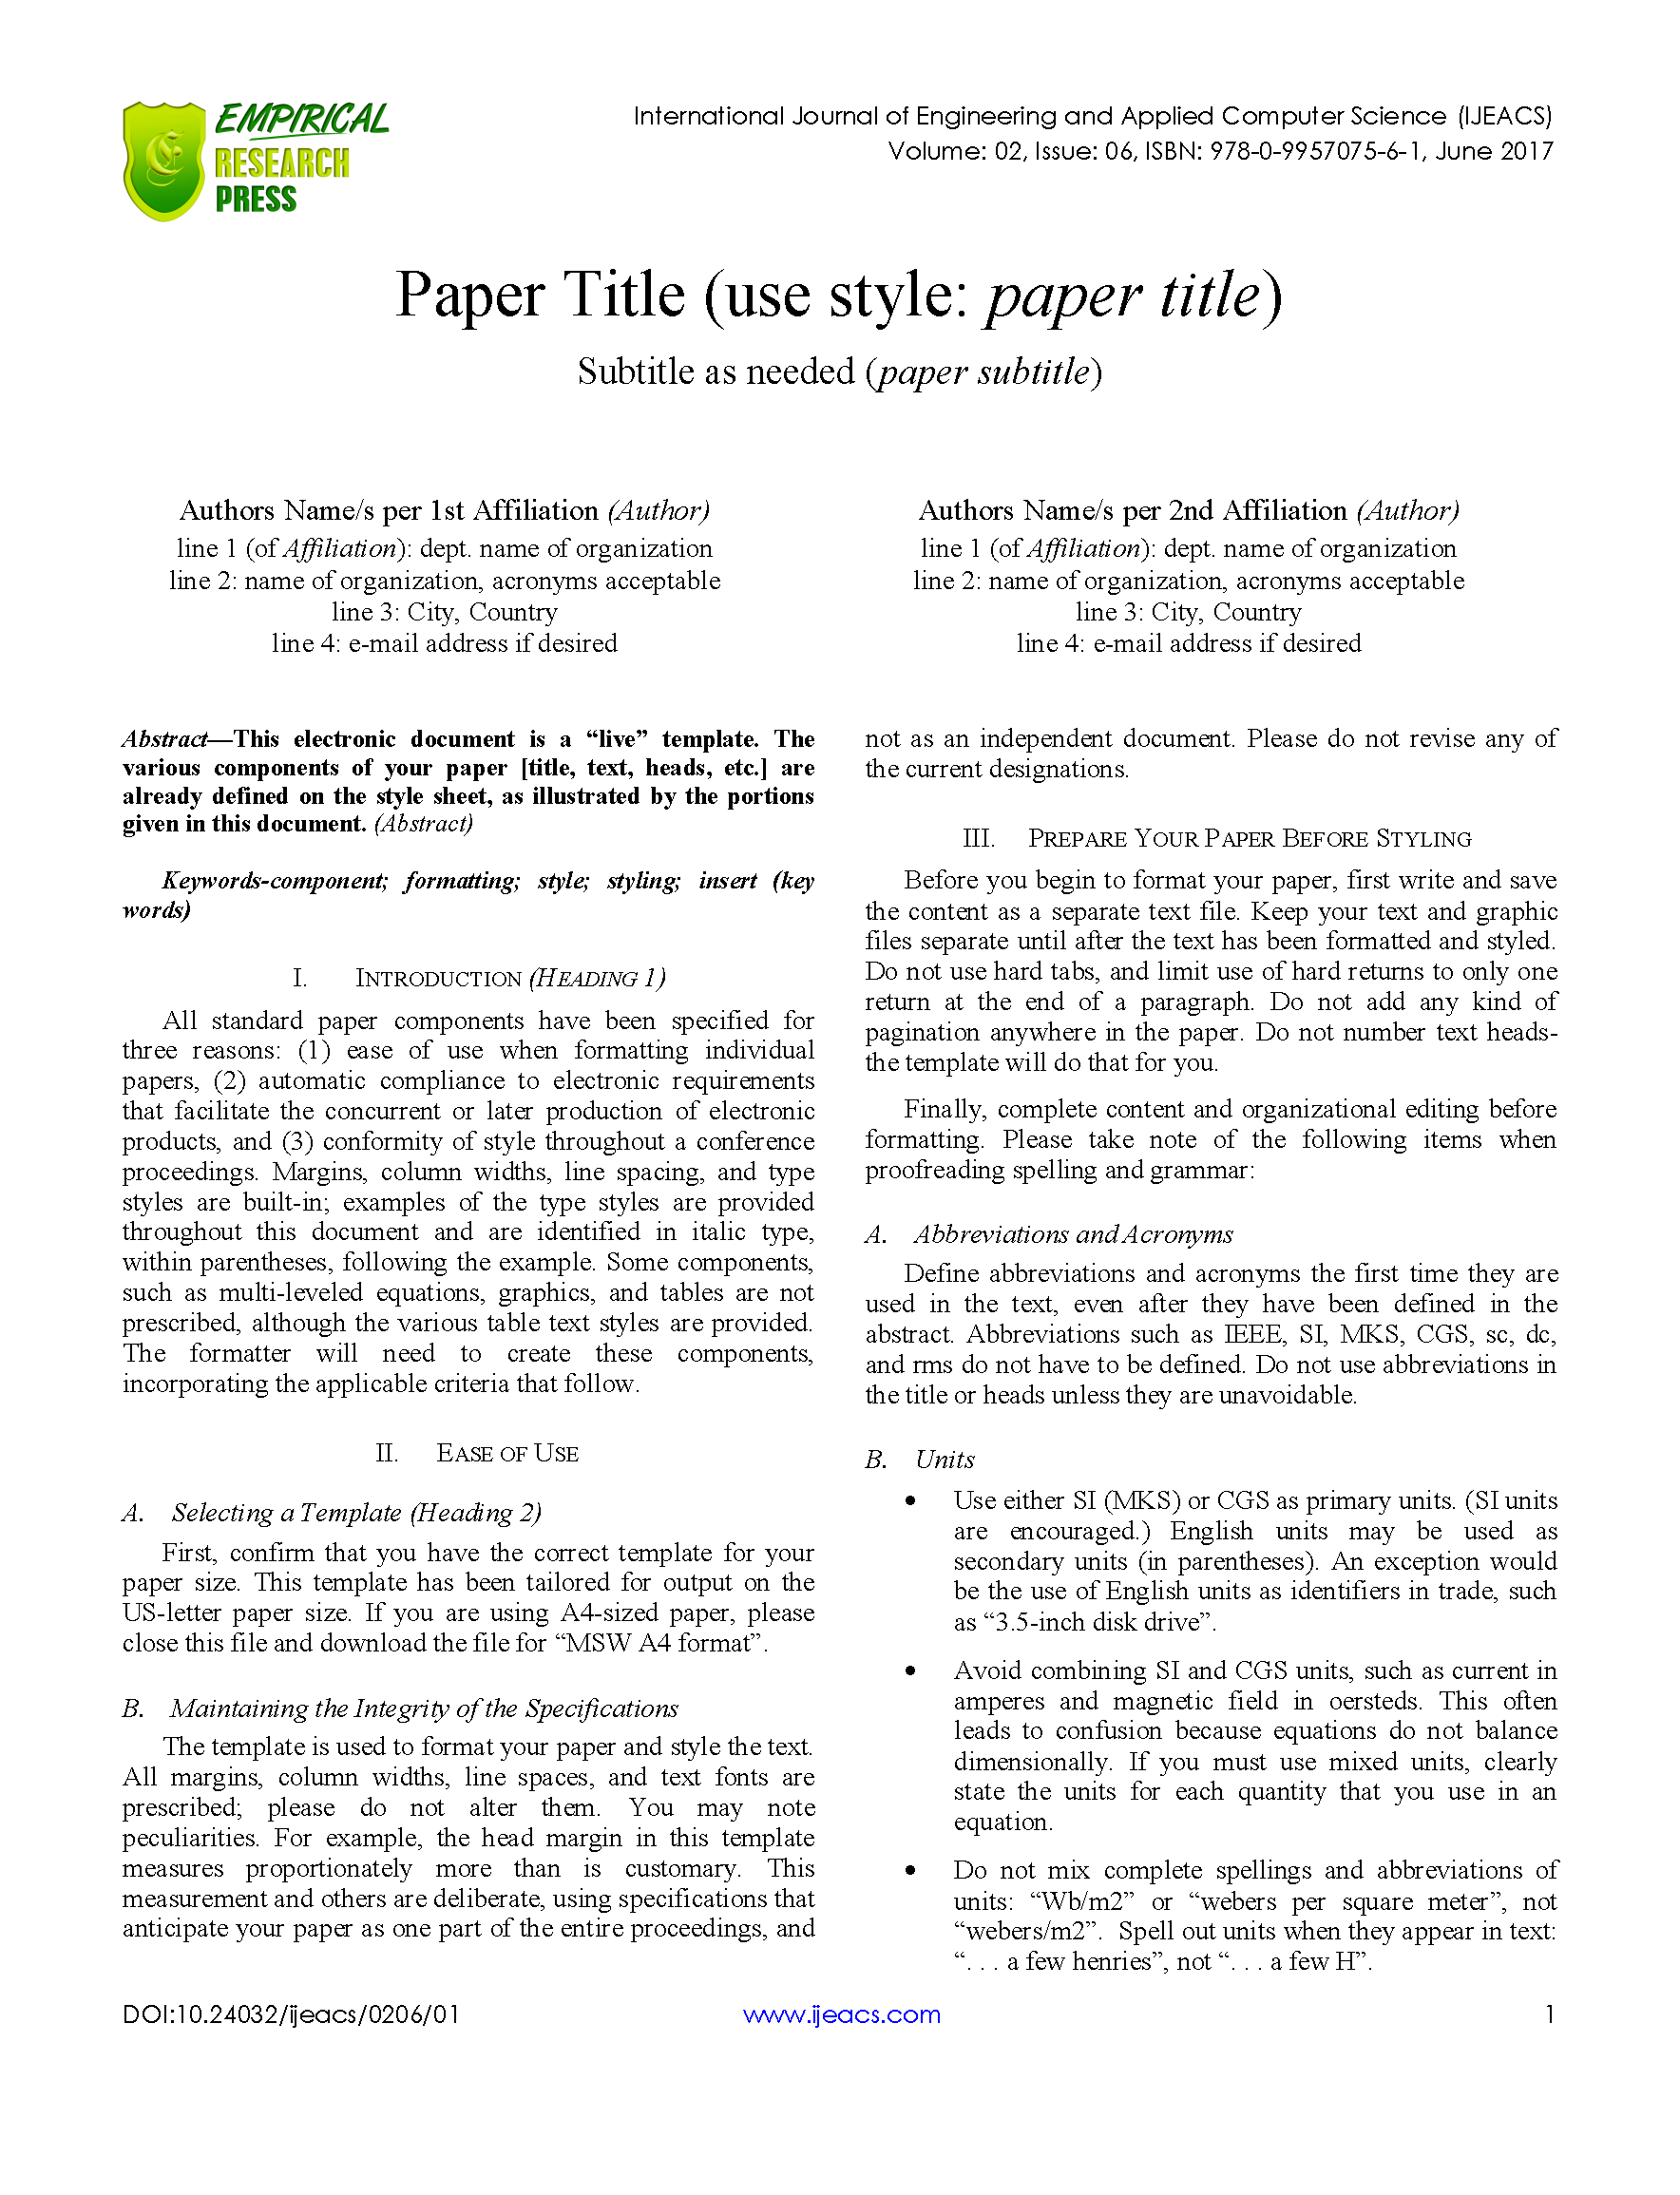 Computer Science Journal